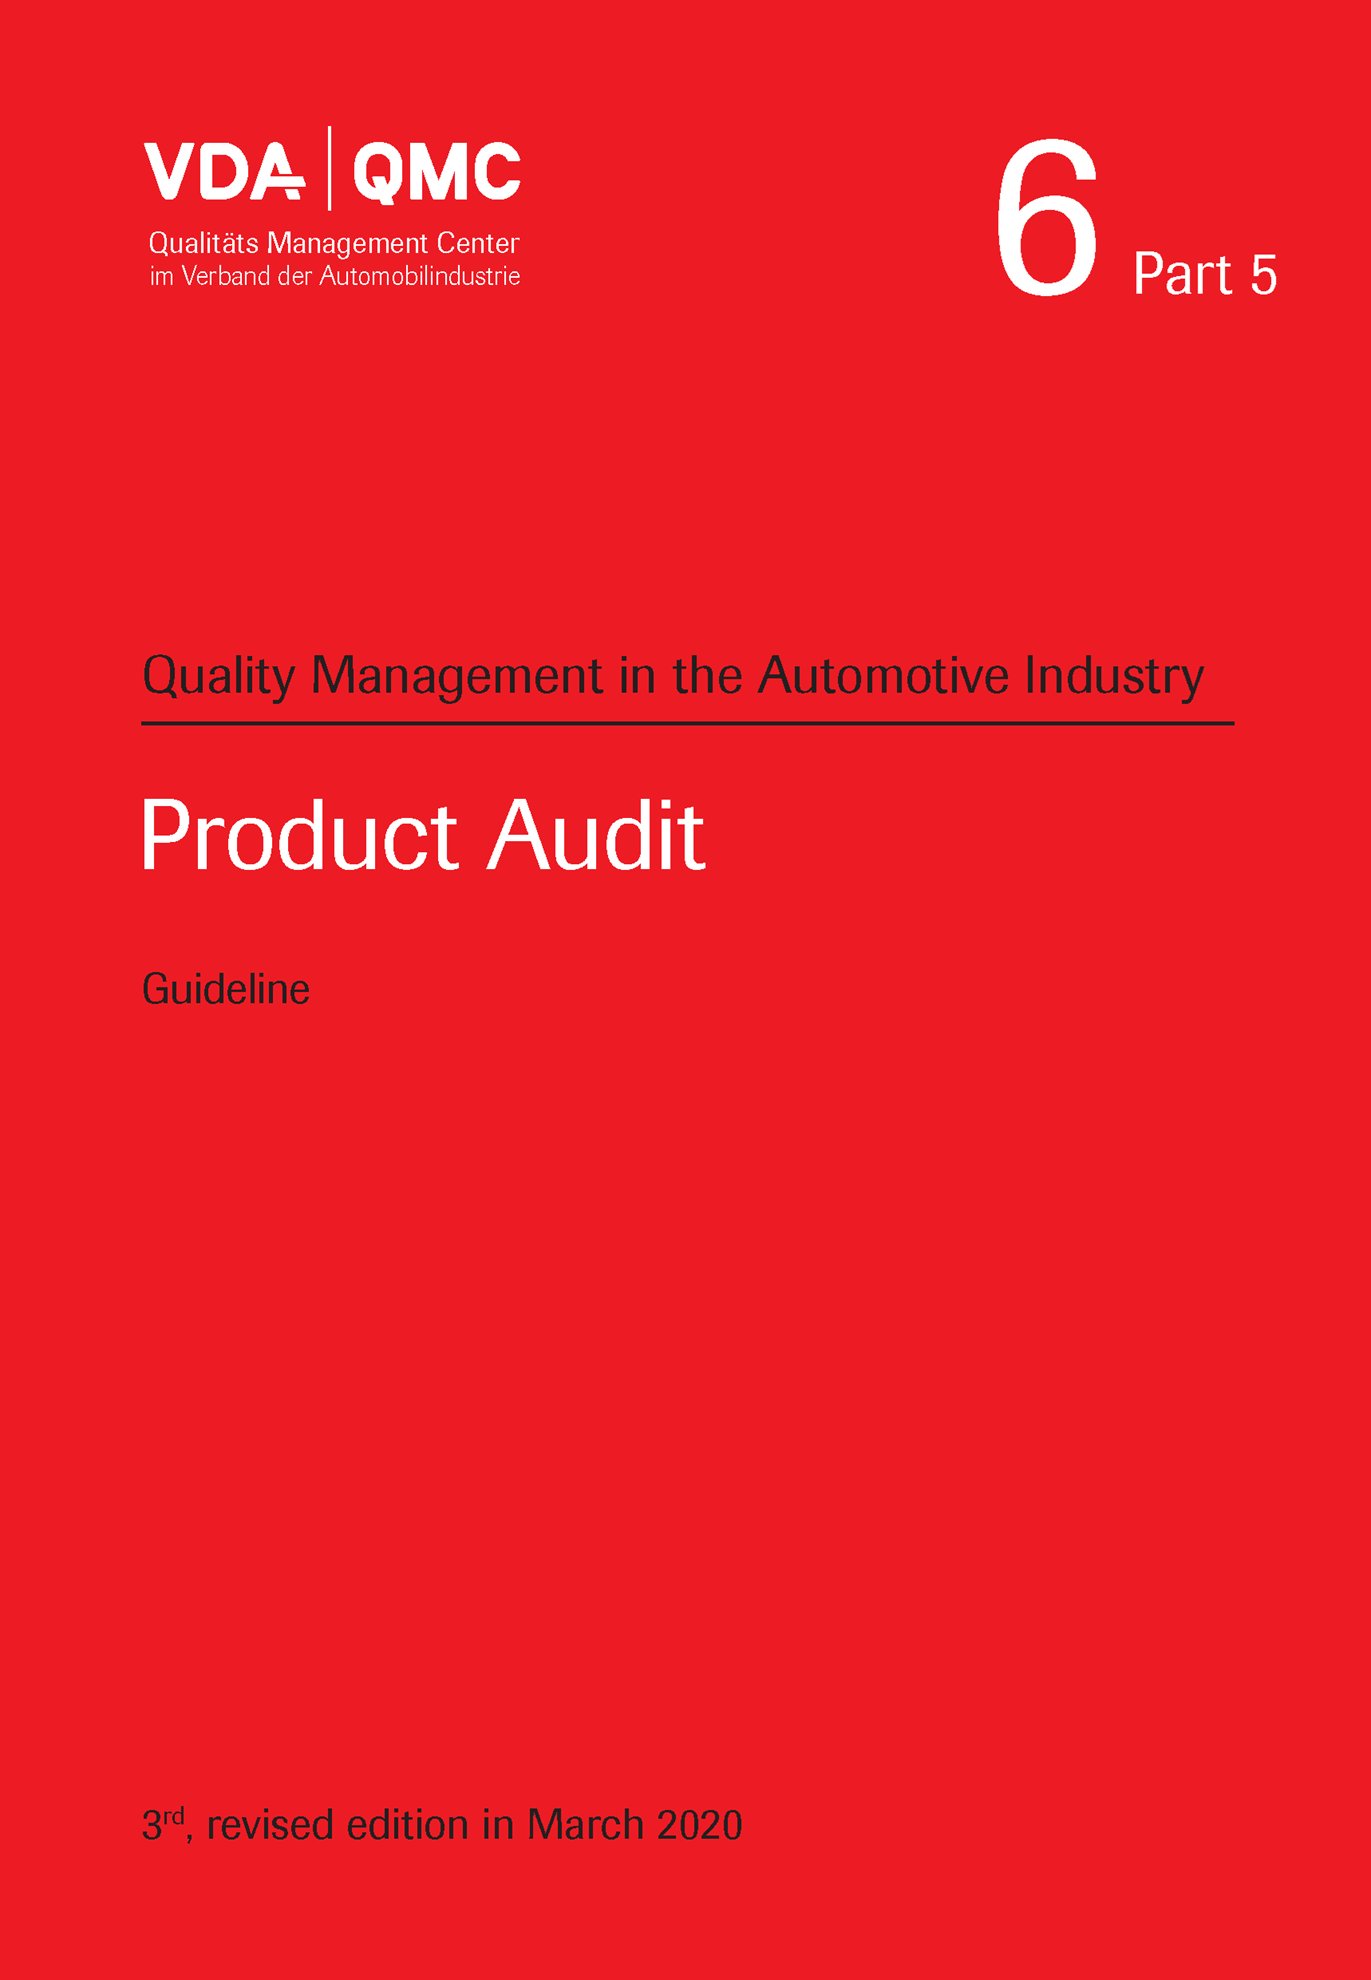 Publikácie  VDA Volume 6 Part 5 - Product Audit, 3rd, revised edition, March 2020 1.3.2020 náhľad